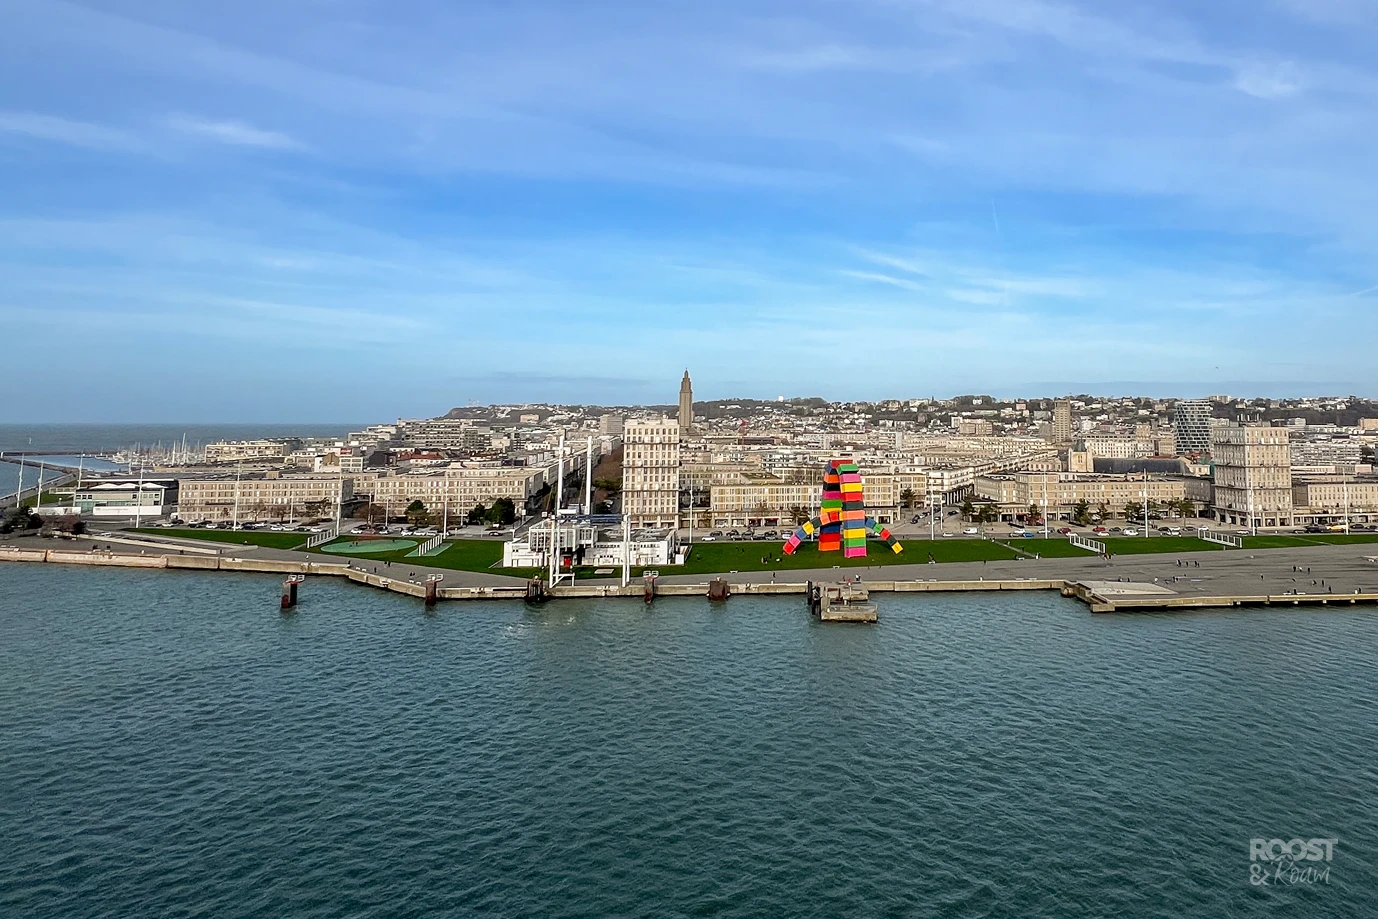 Should you visit Le Havre